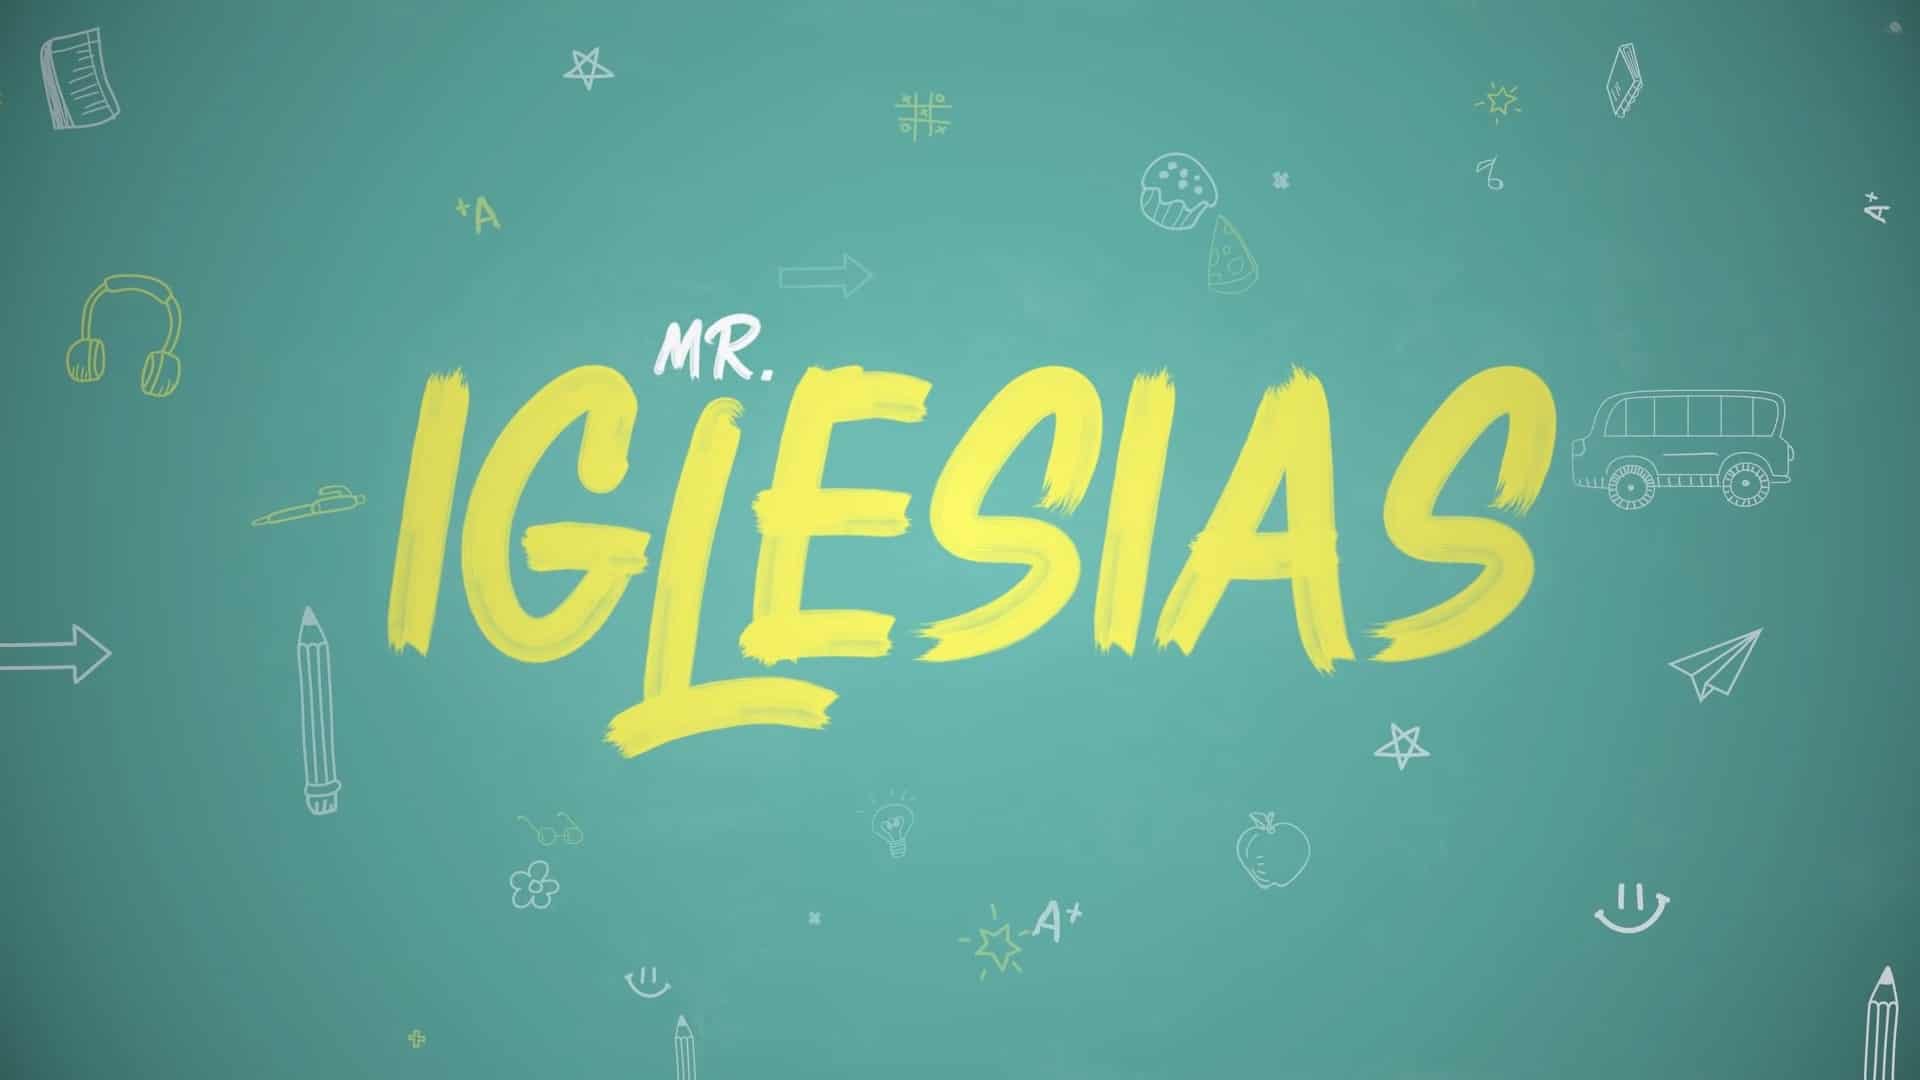 🎬 Mr. Iglesias Part 3 [TRAILER] Coming to Netflix December 8, 2020 2